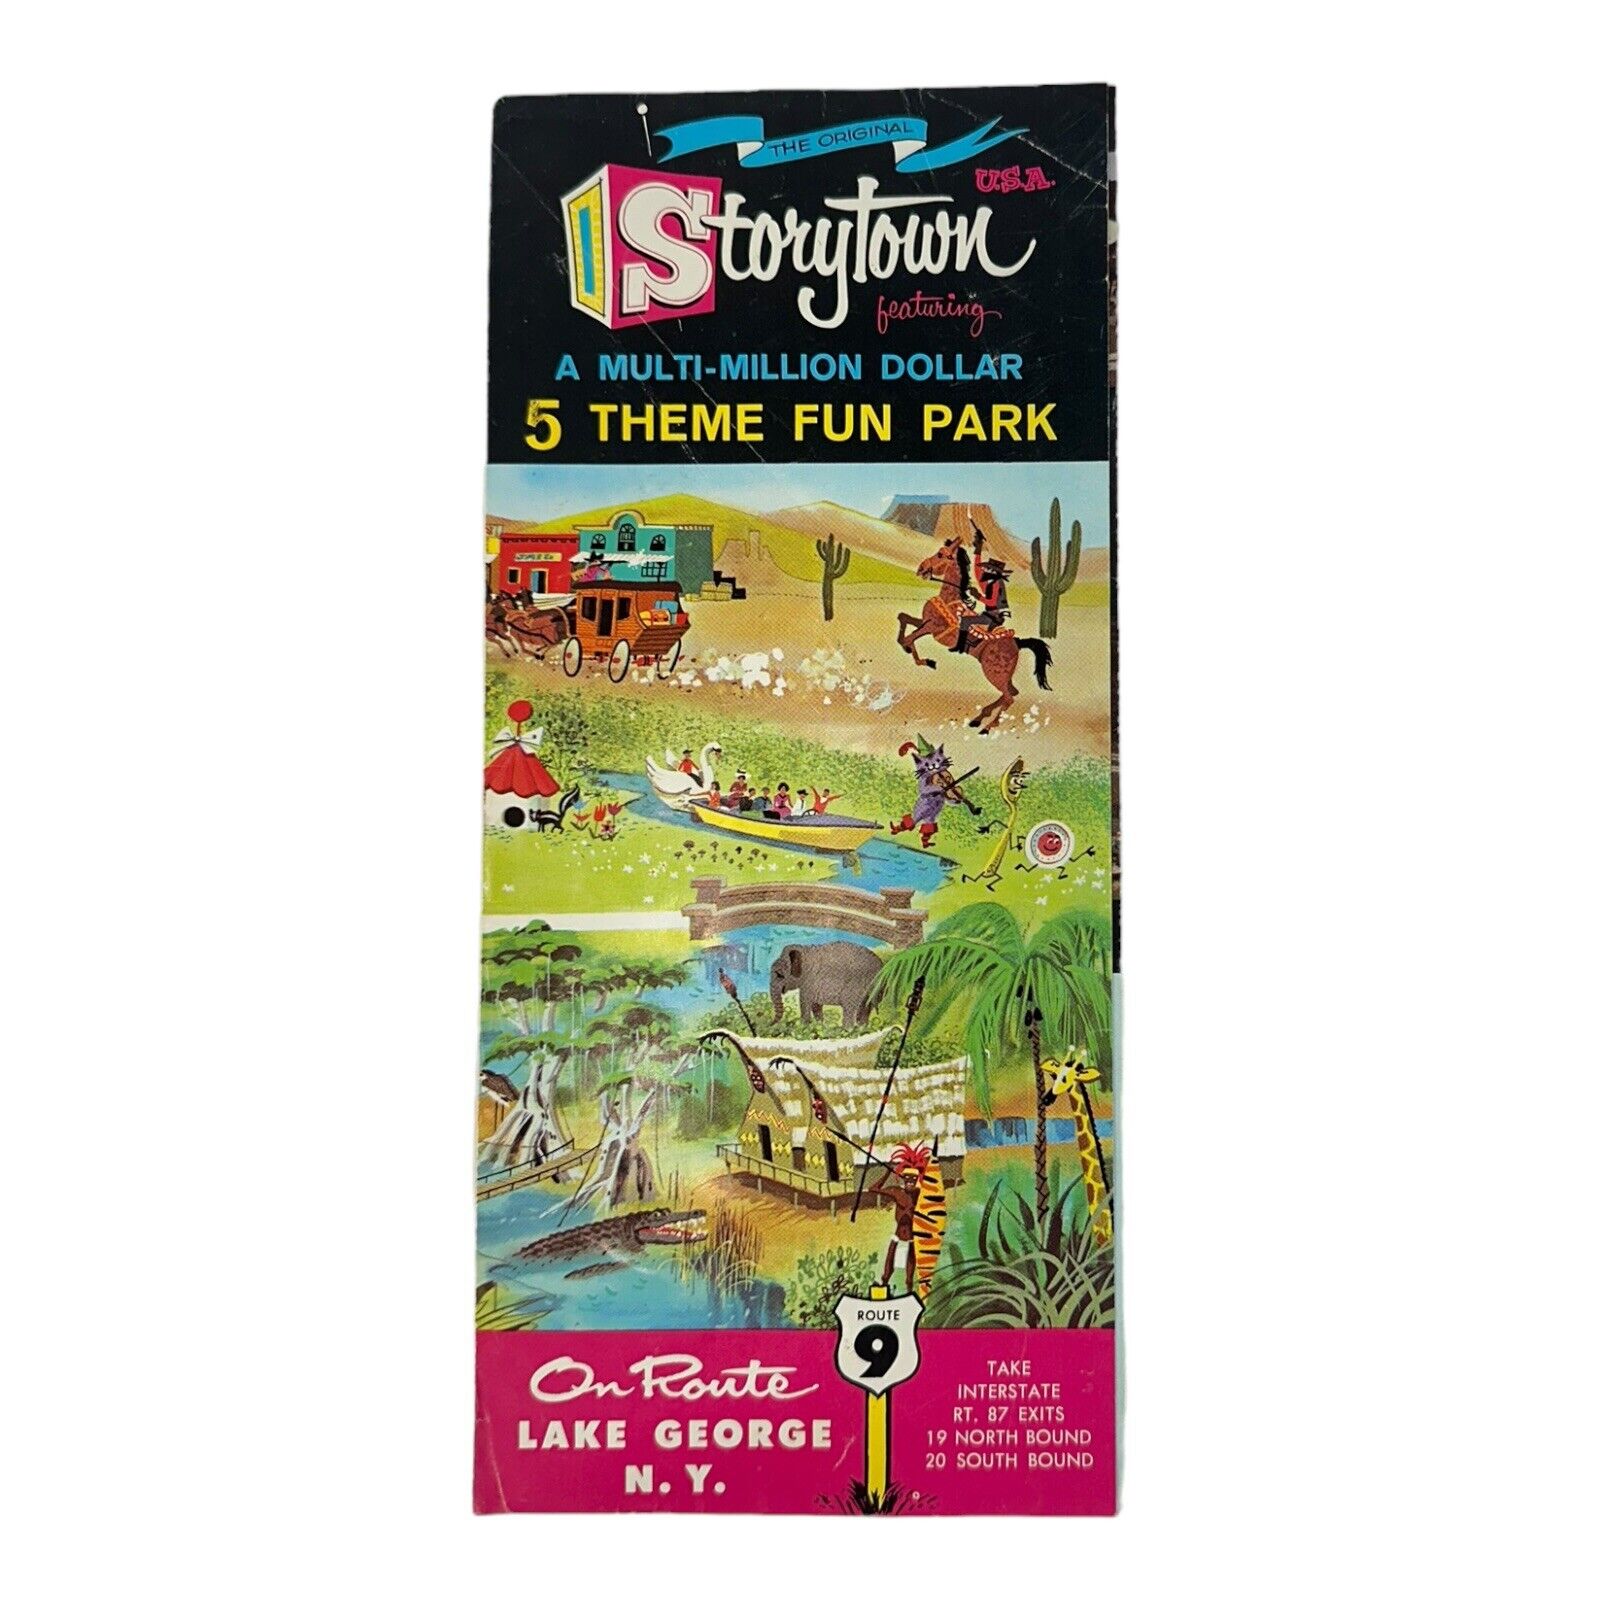 1971 Storytown USA Ghost Town Jungle Land Lake George New York Brochure Vintage